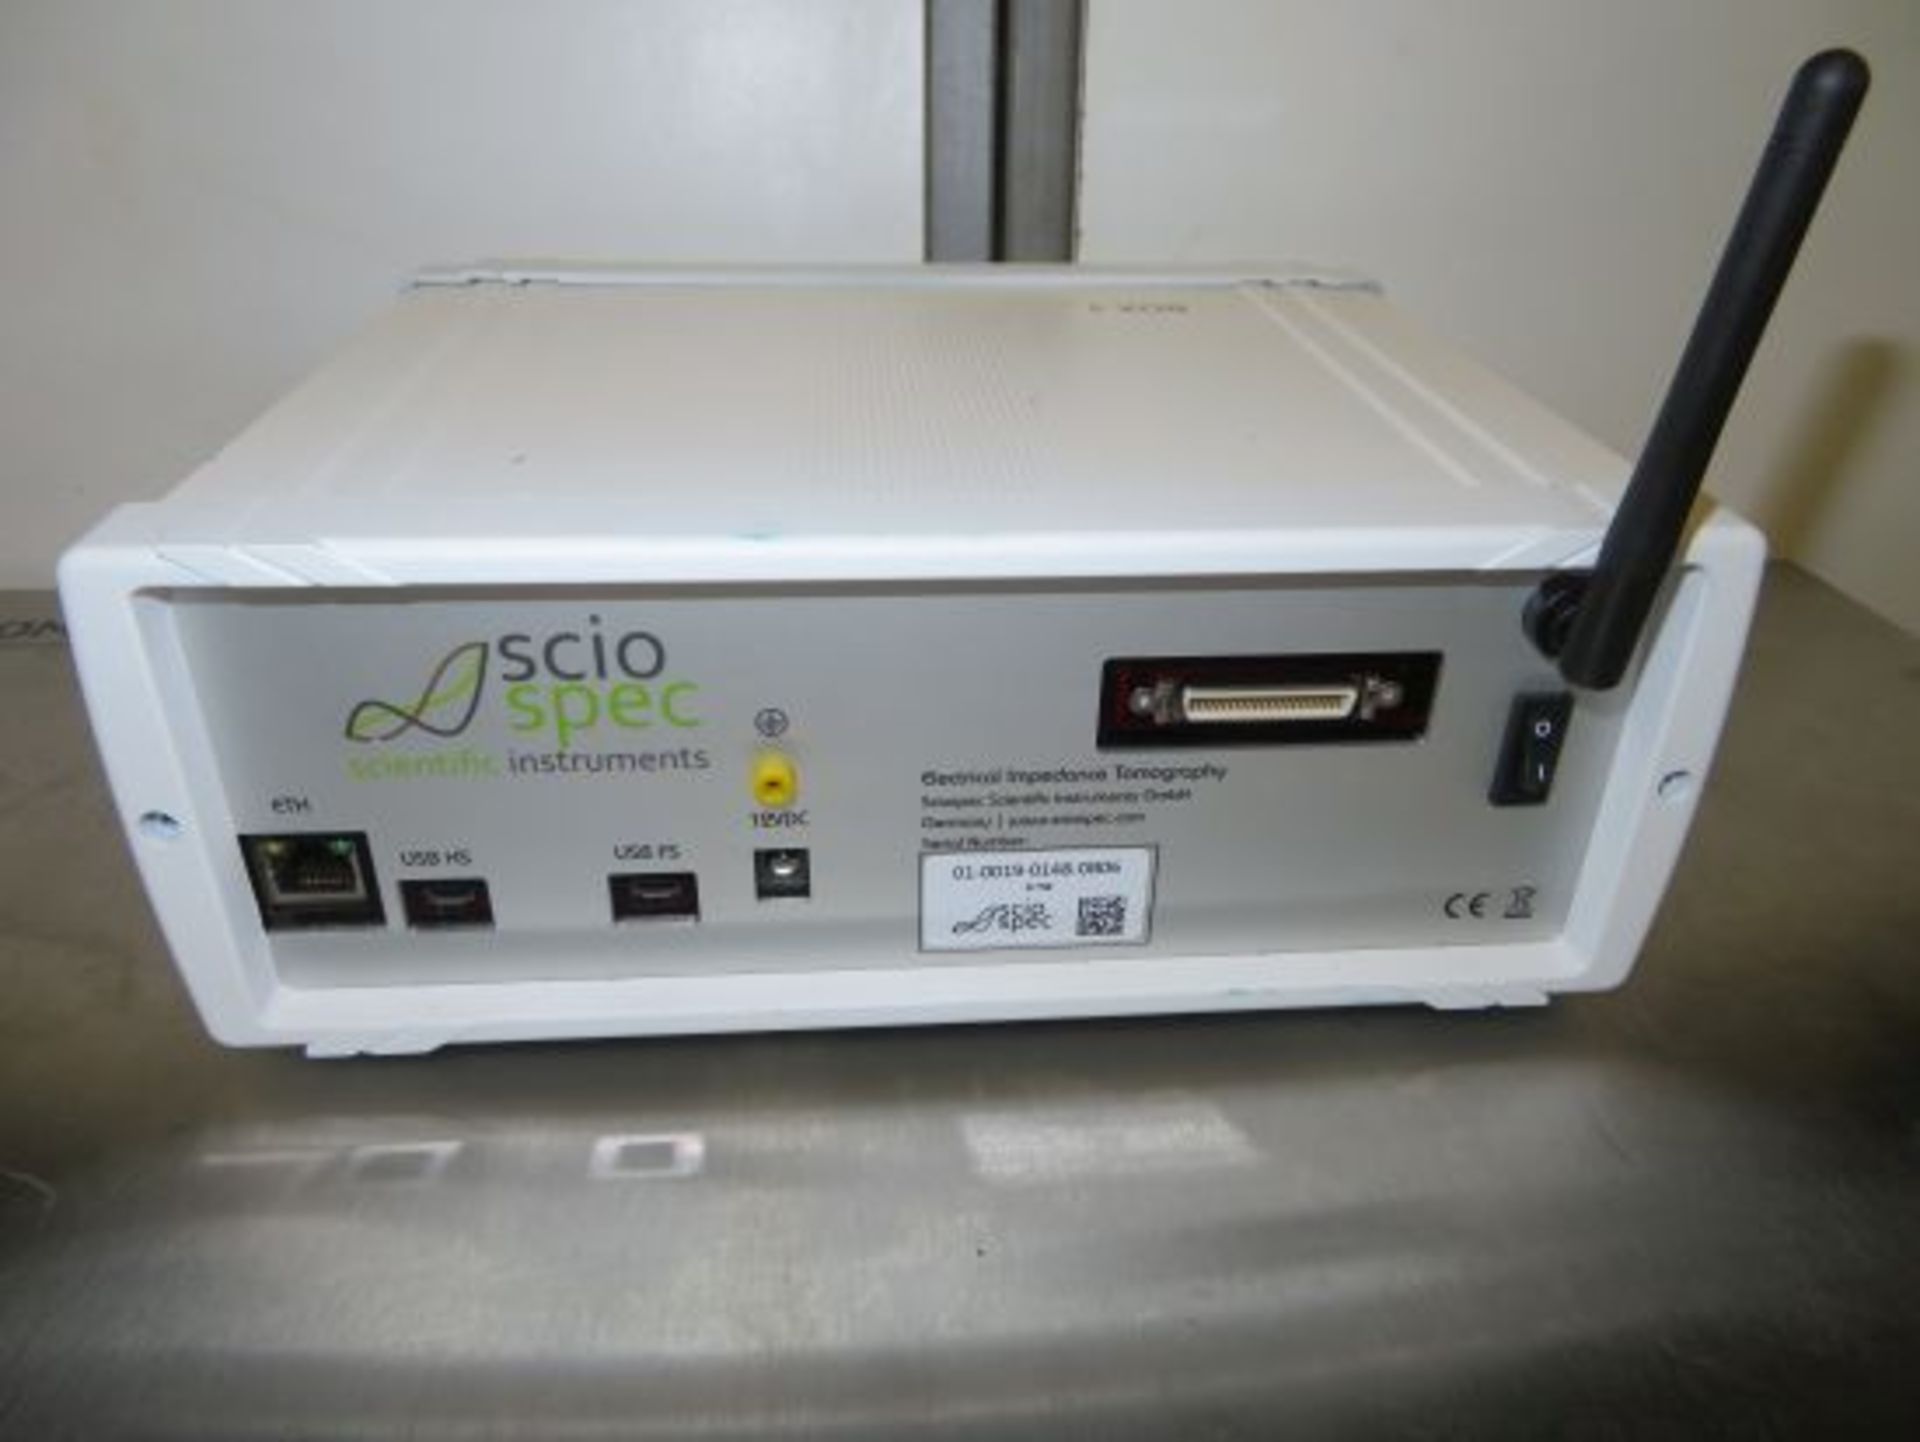 Scio Spec Scientific Instruments Electrical Impedance Tomography (E.I.T) Unit, Serial No 01-0019- - Image 2 of 3